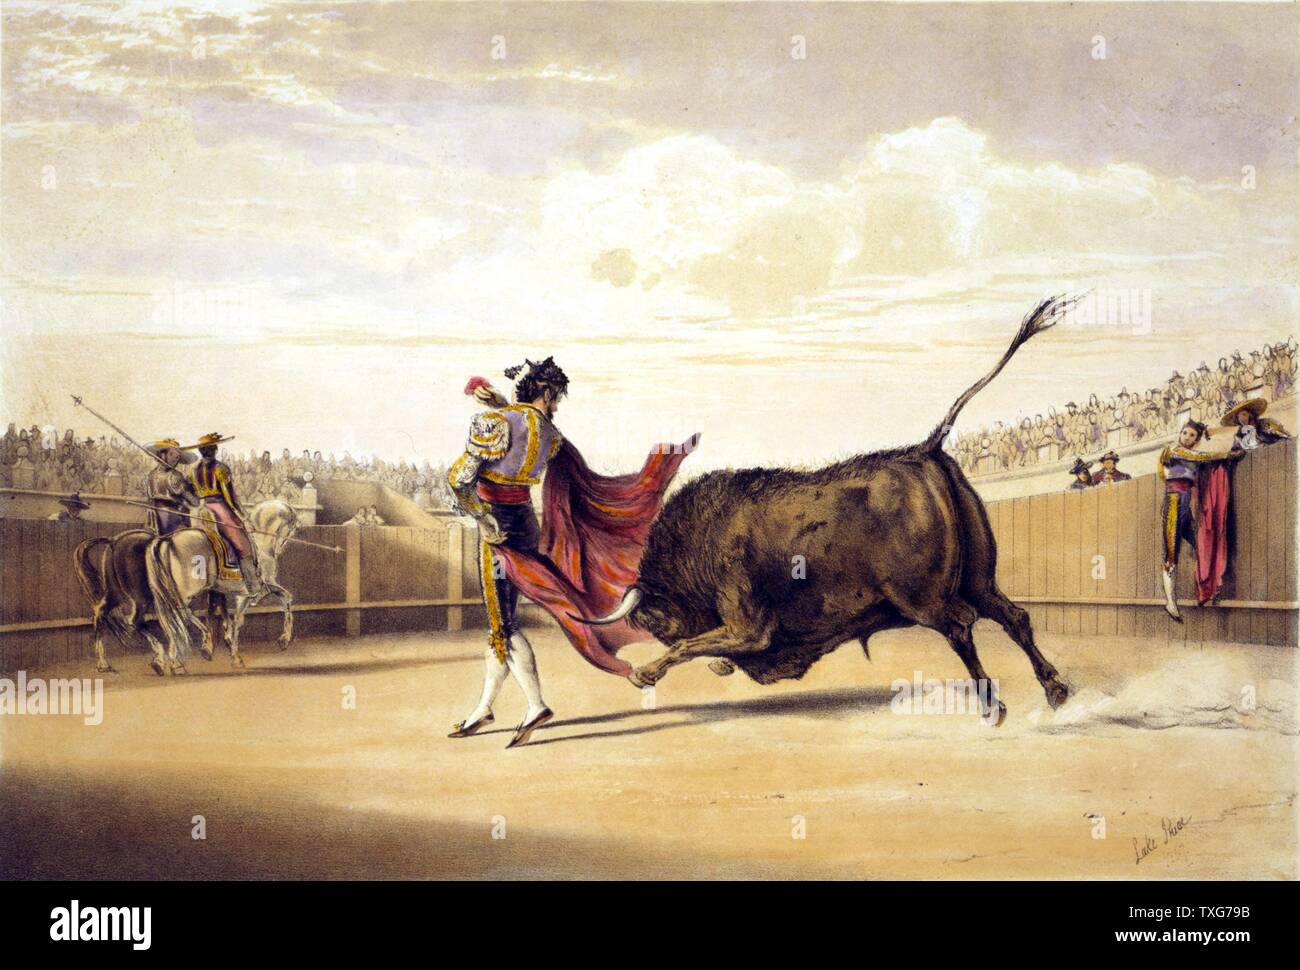 Lake PriceWilliam Lake Price English school Bullfighting : Bull charging while the matador plays with his cape  Chromolithograph Stock Photo